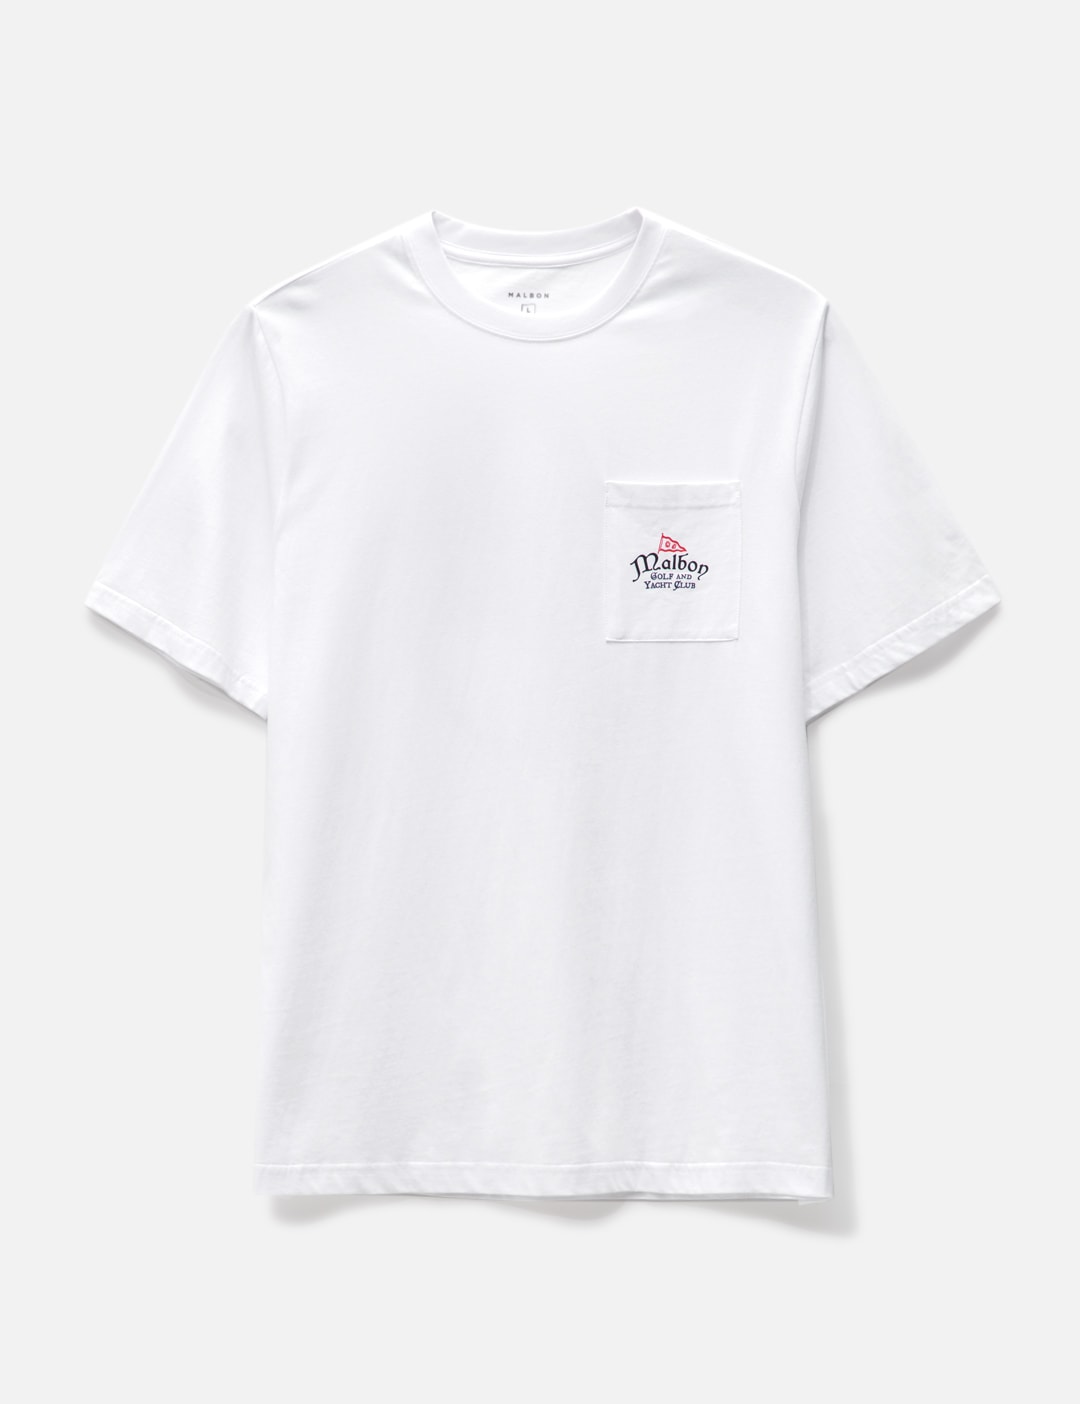 Malbon Golf - Yacht Club Pocket T-shirt | HBX - Globally Curated ...